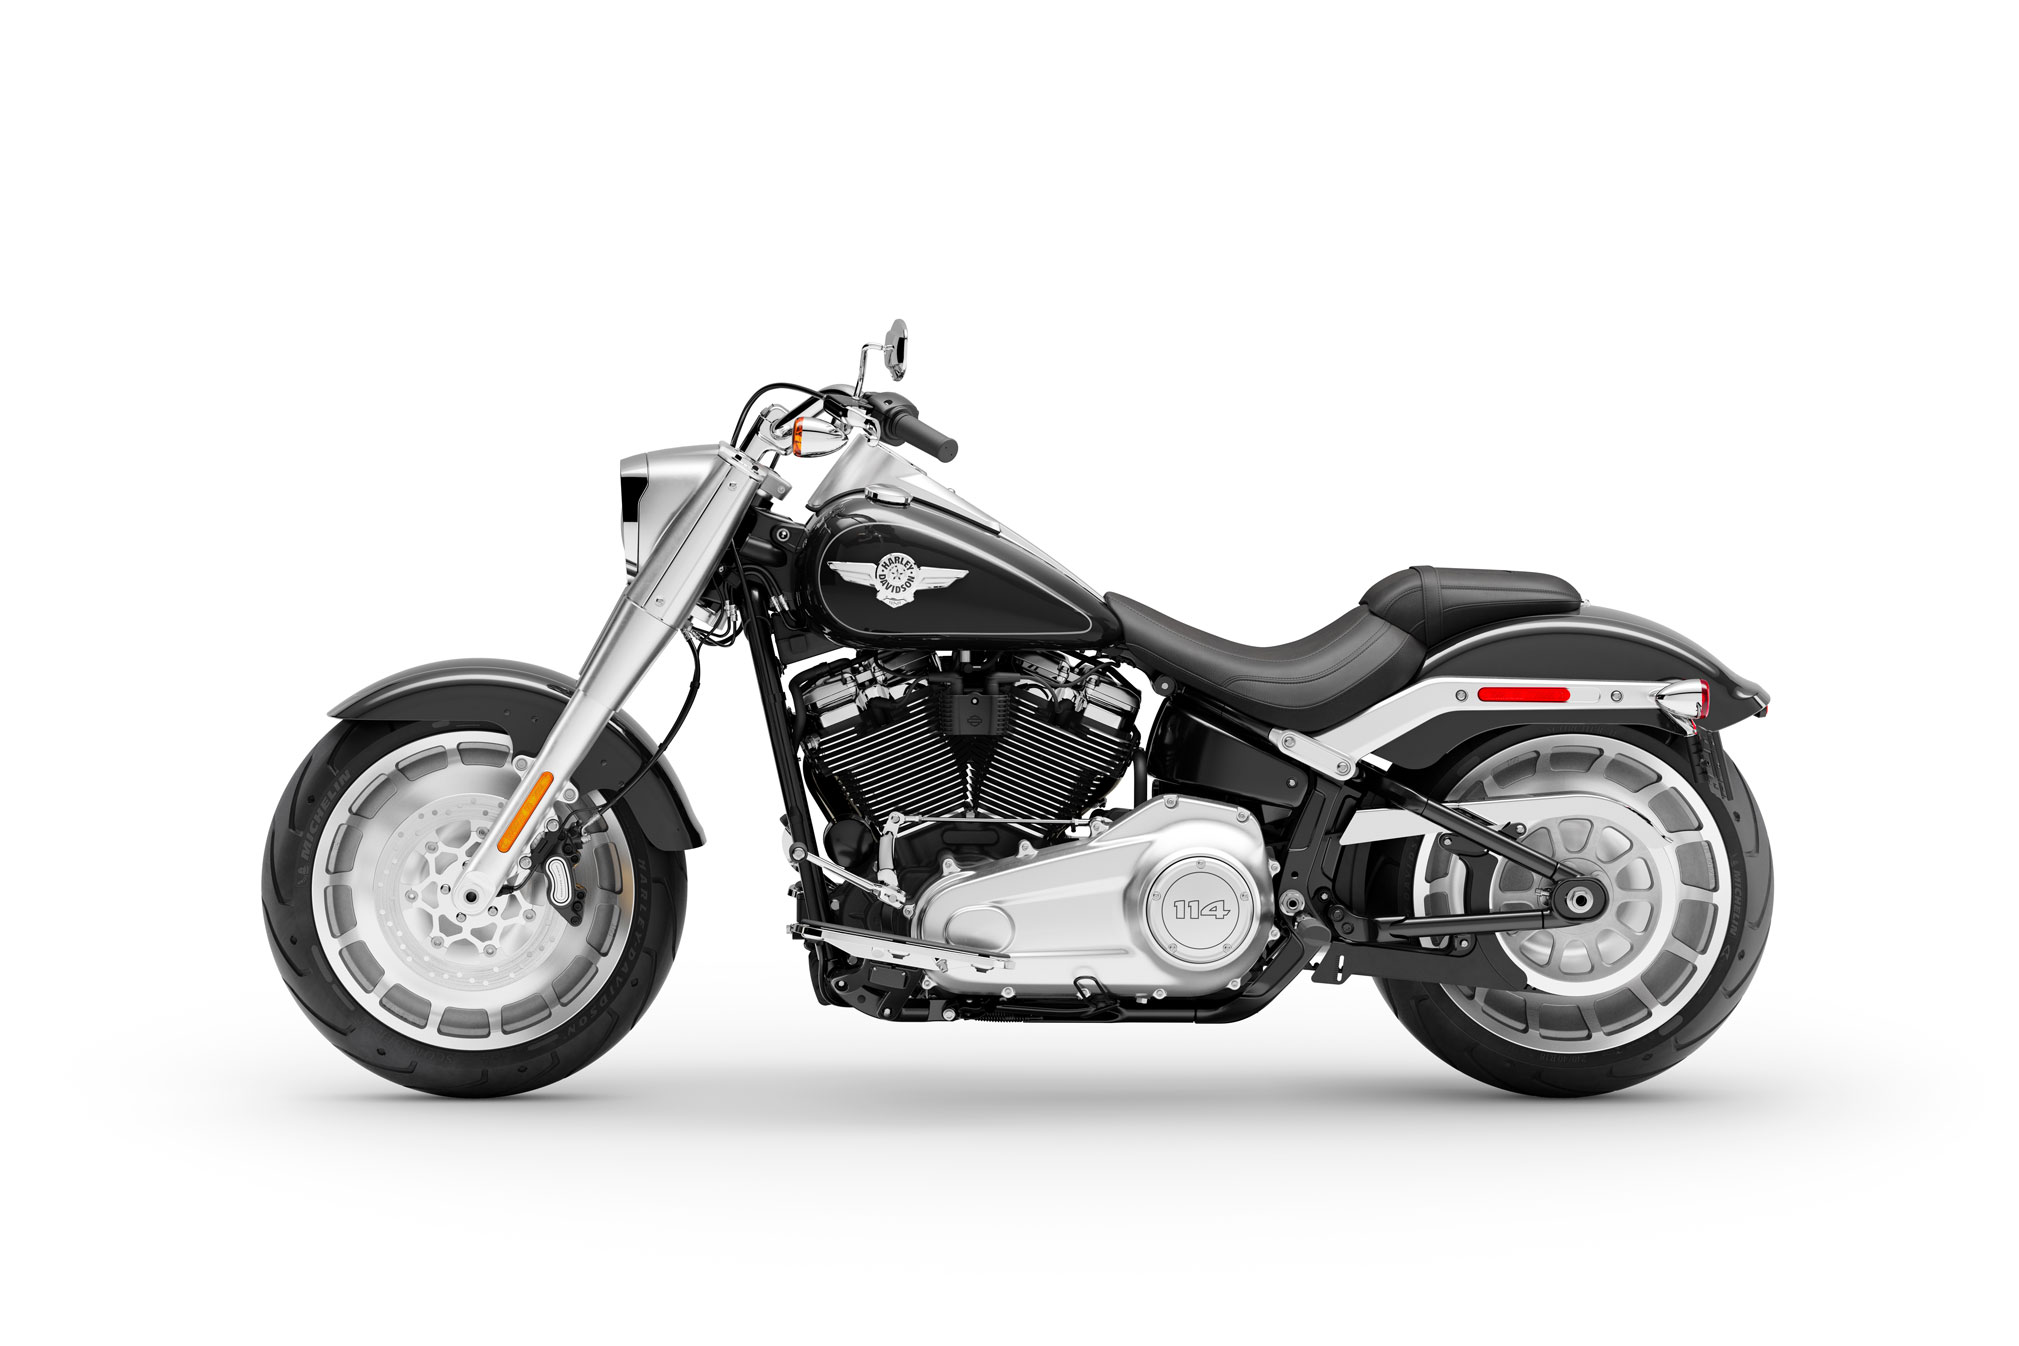 2019 Harley Davidson Fat Boy 114 Guide Total Motorcycle